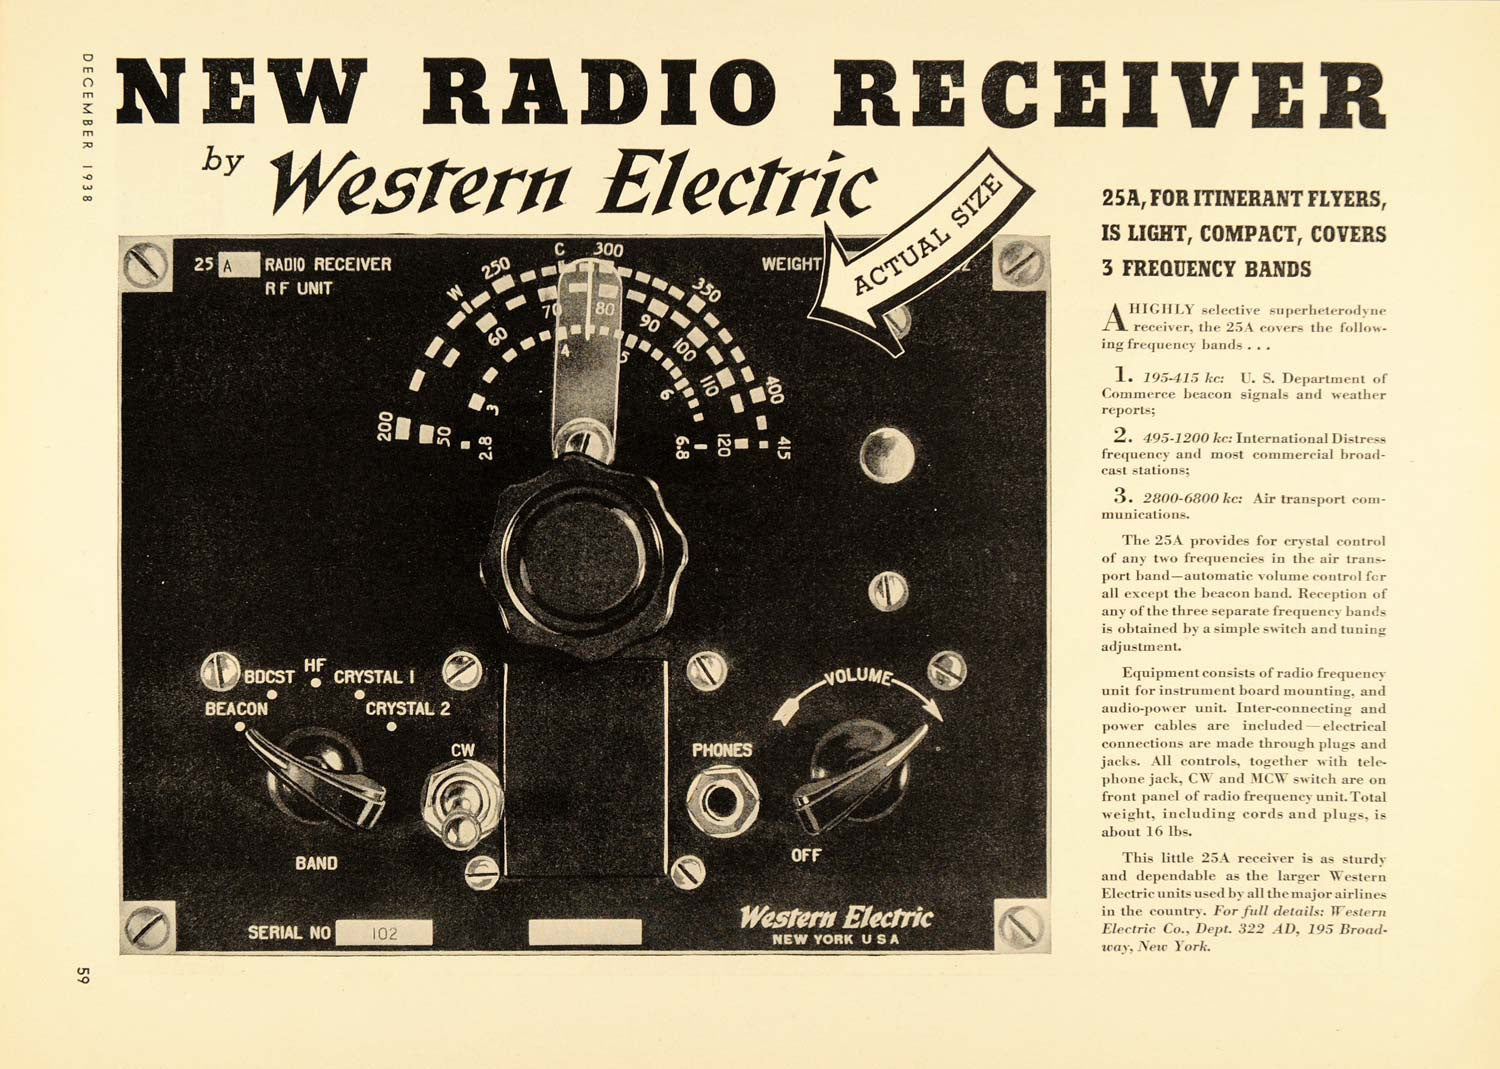 1938 Ad Western Electric Radio Reciever Airplanes - ORIGINAL ADVERTISING FLY1 - Period Paper
